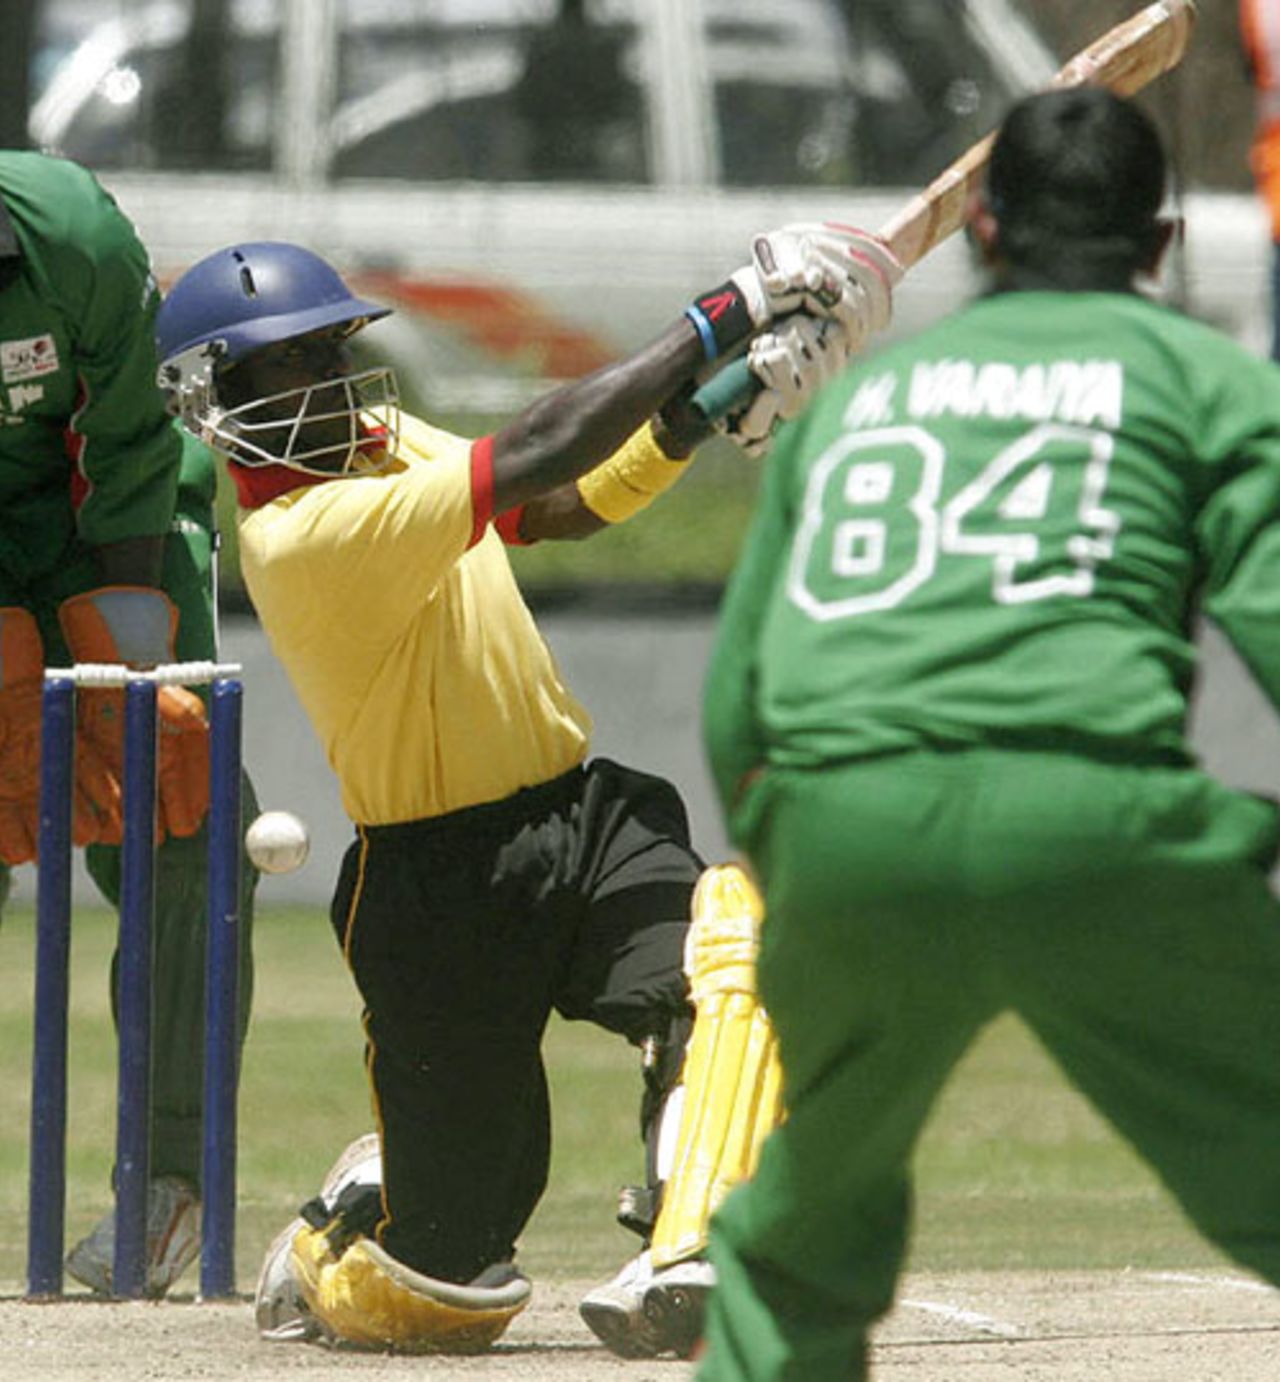 Joel Olwenyi misses a shot as Kenya's bowler Hiren Varaiya looks on, Kenya v Uganda, 3rd match, Twenty20 Quadrangular, Nairobi, September 2, 2007 